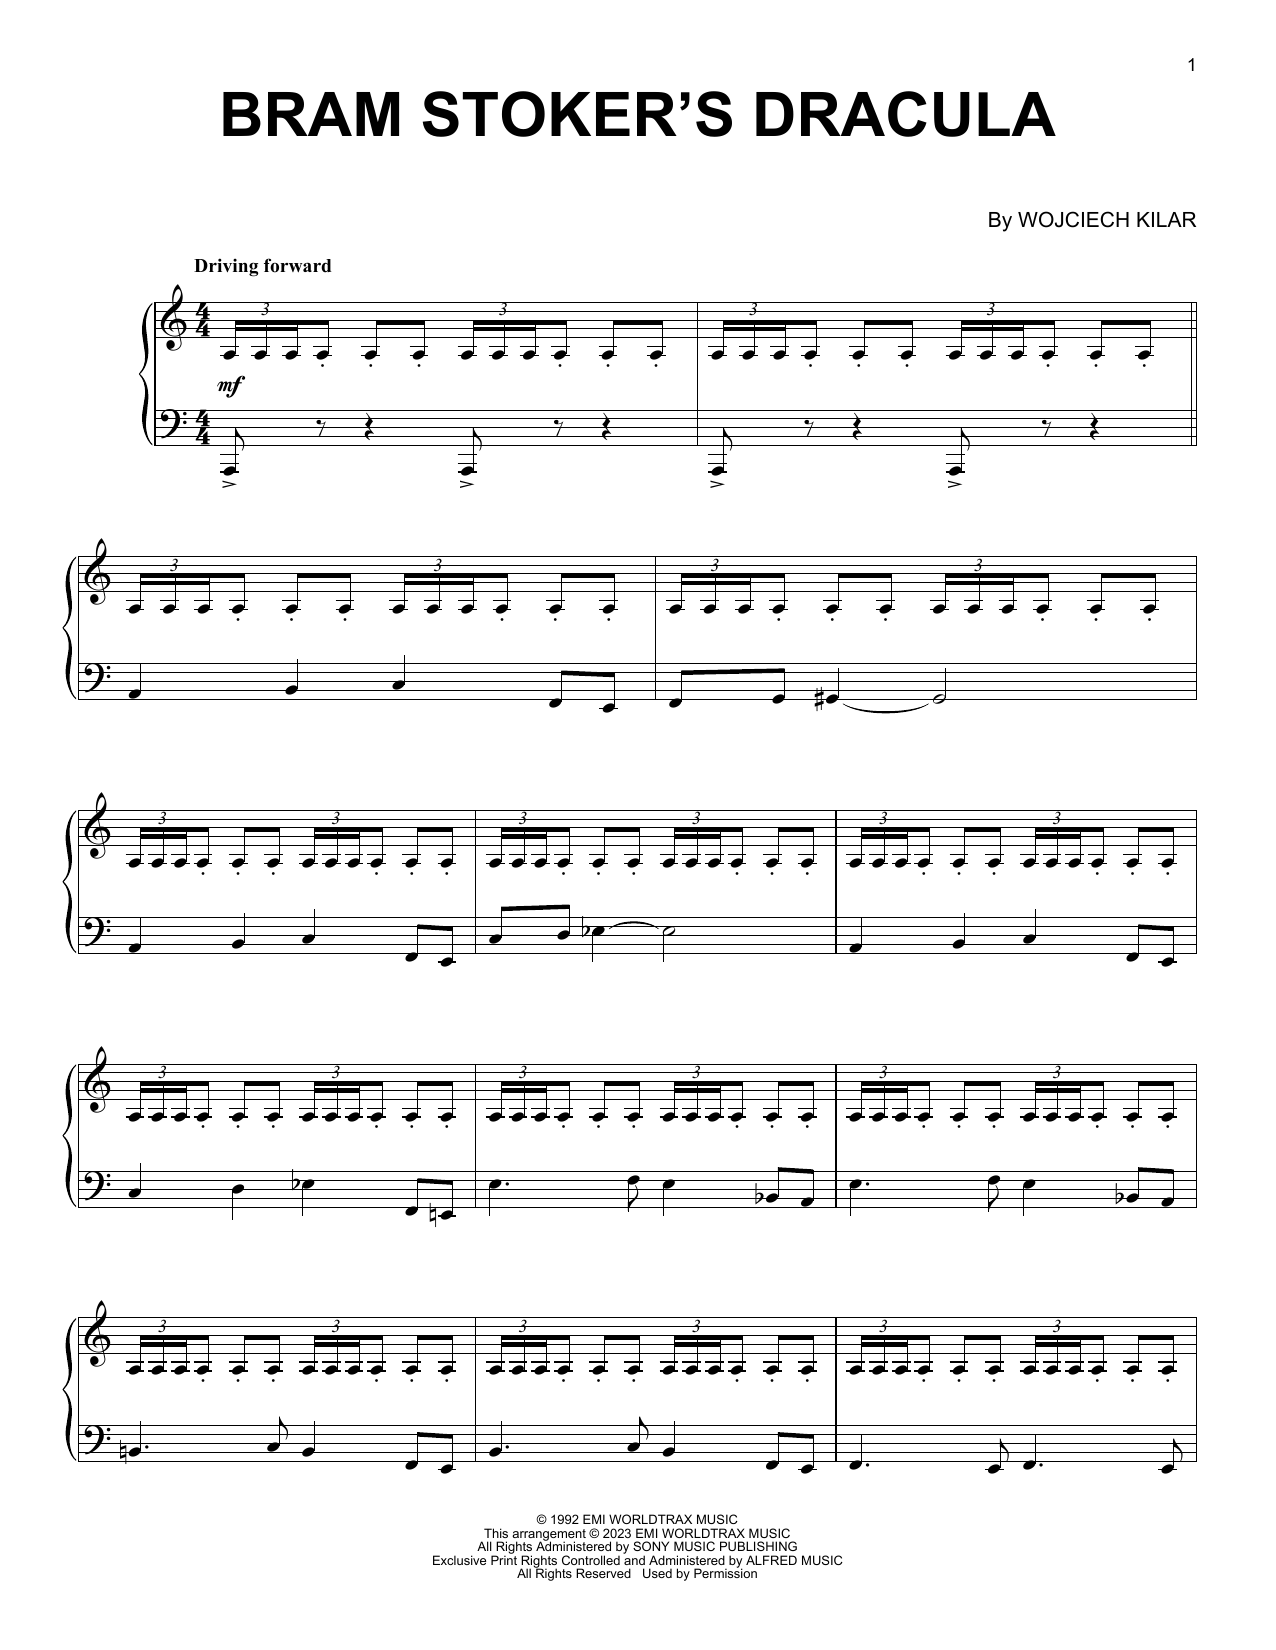 Download Wojciech Kilar Bram Stoker's Dracula Sheet Music and learn how to play Piano Solo PDF digital score in minutes